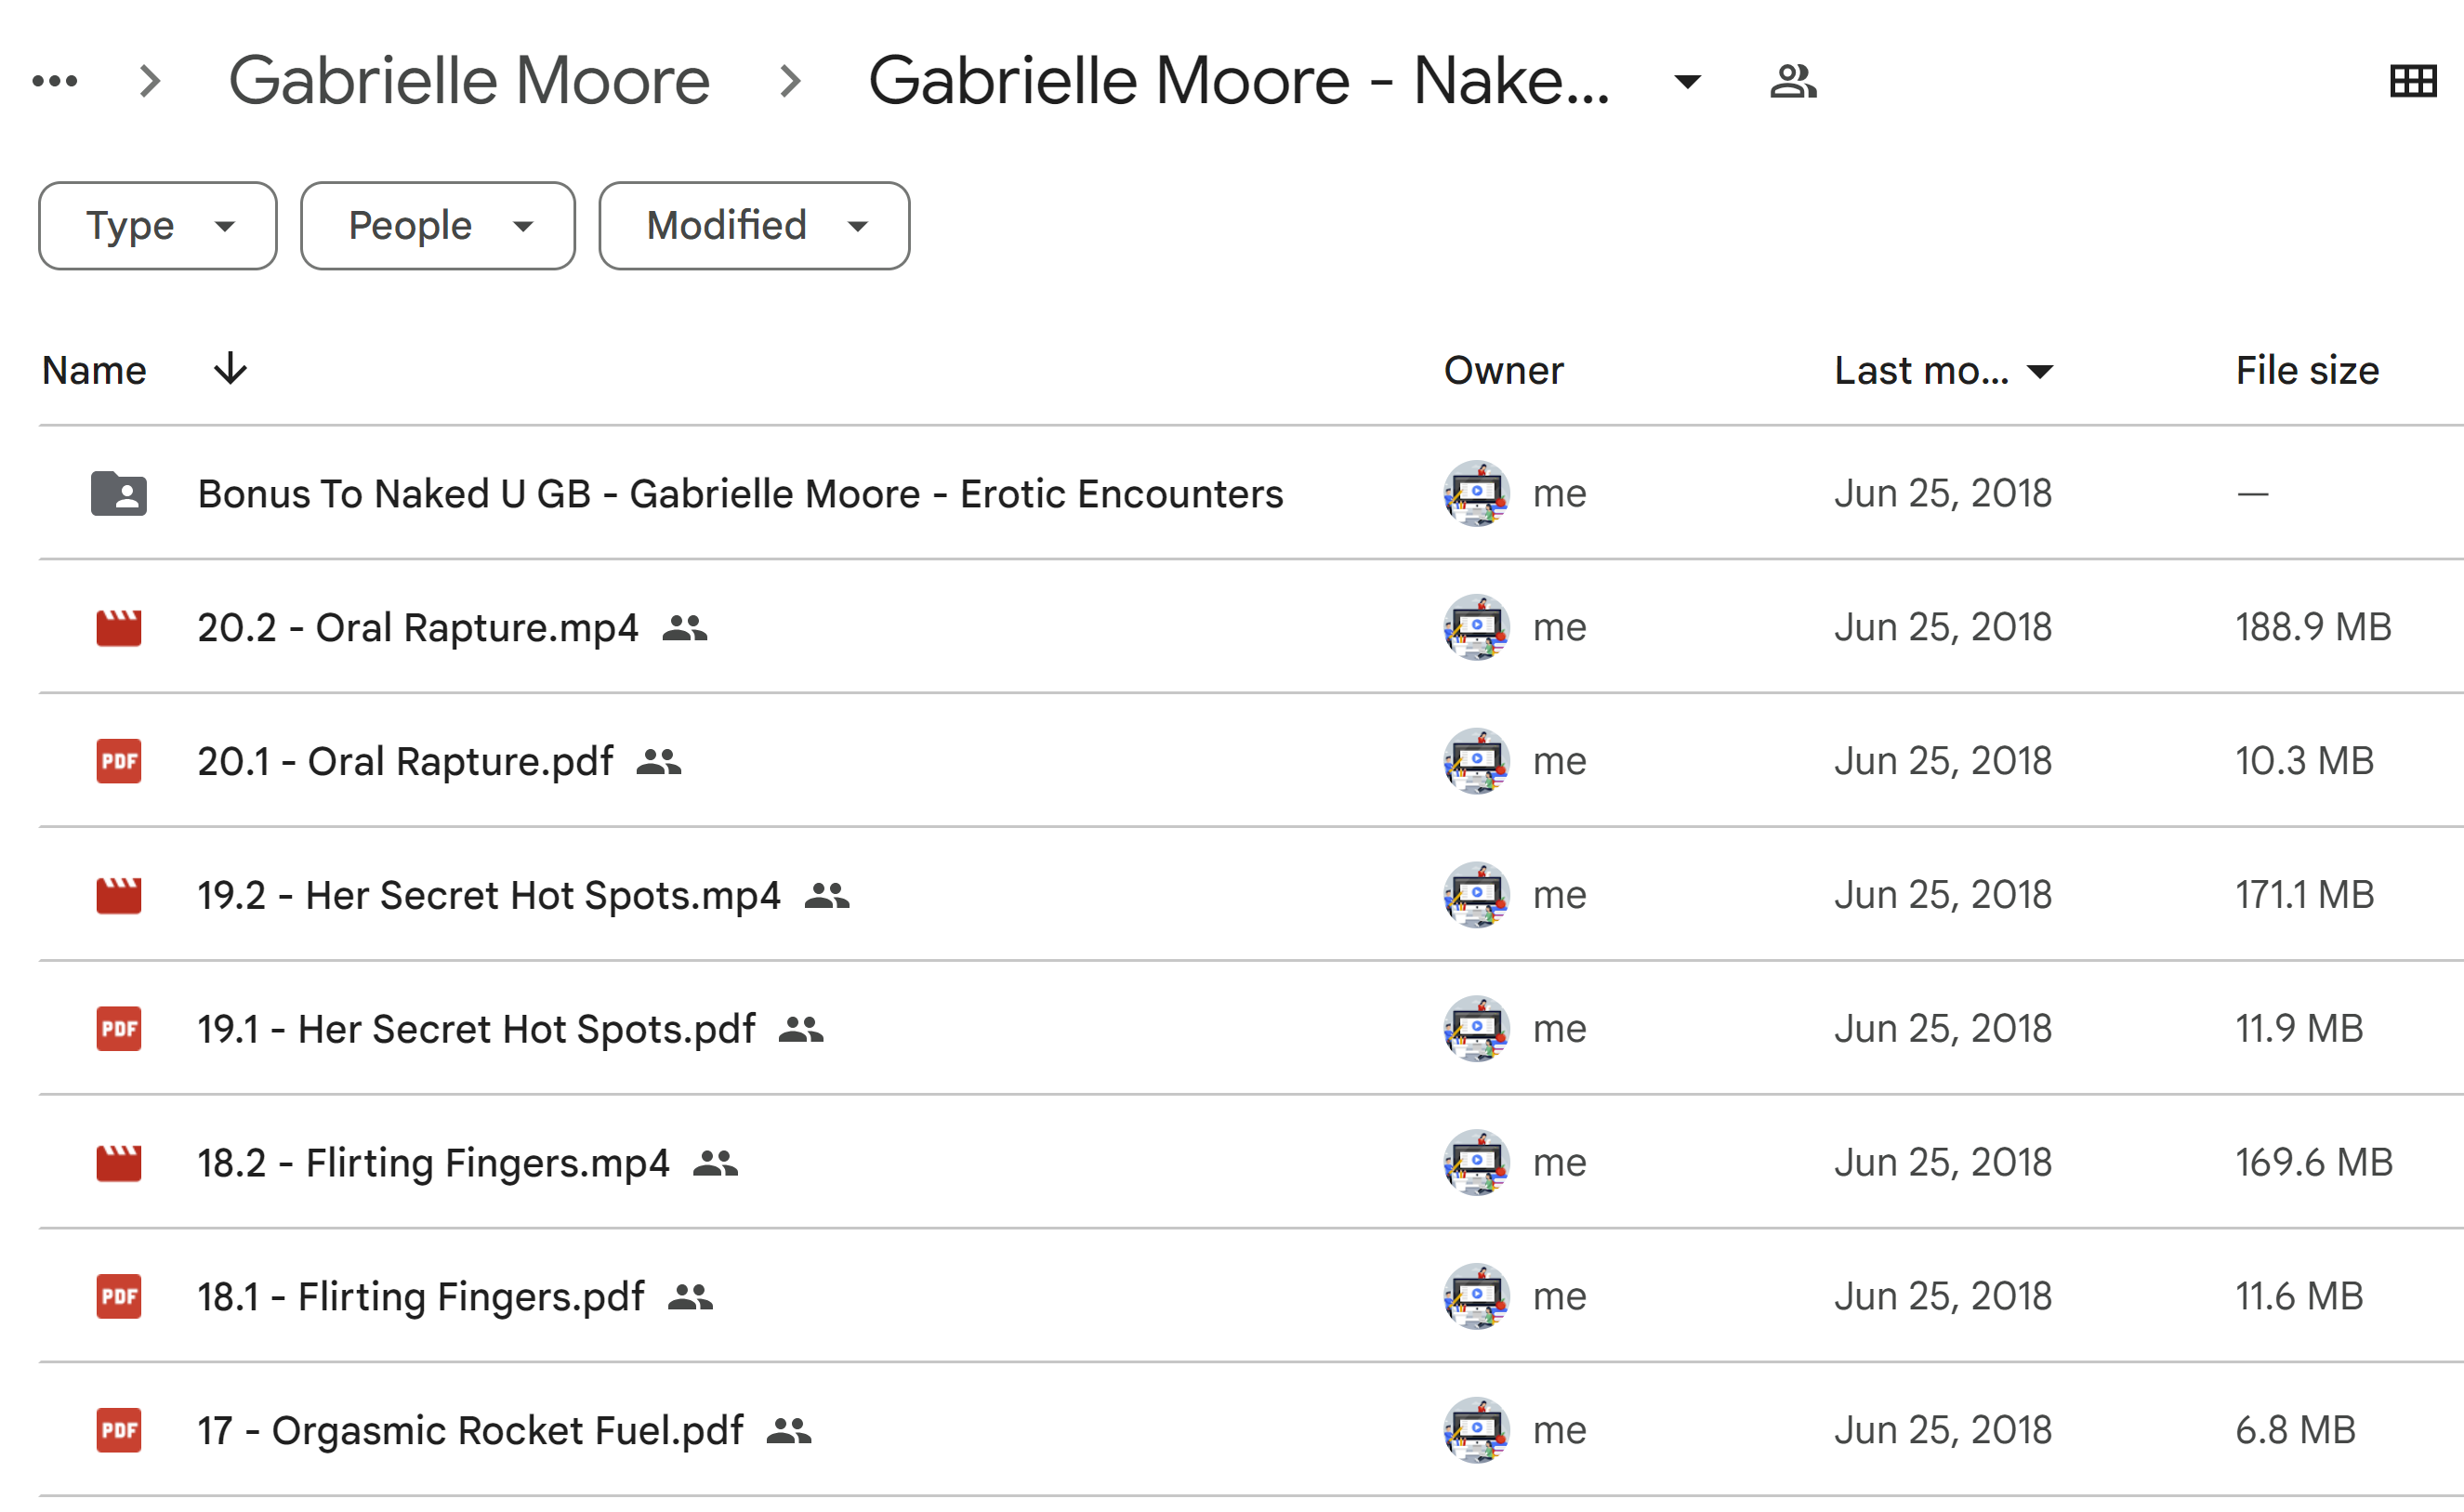 Gabrielle Moore Naked U 